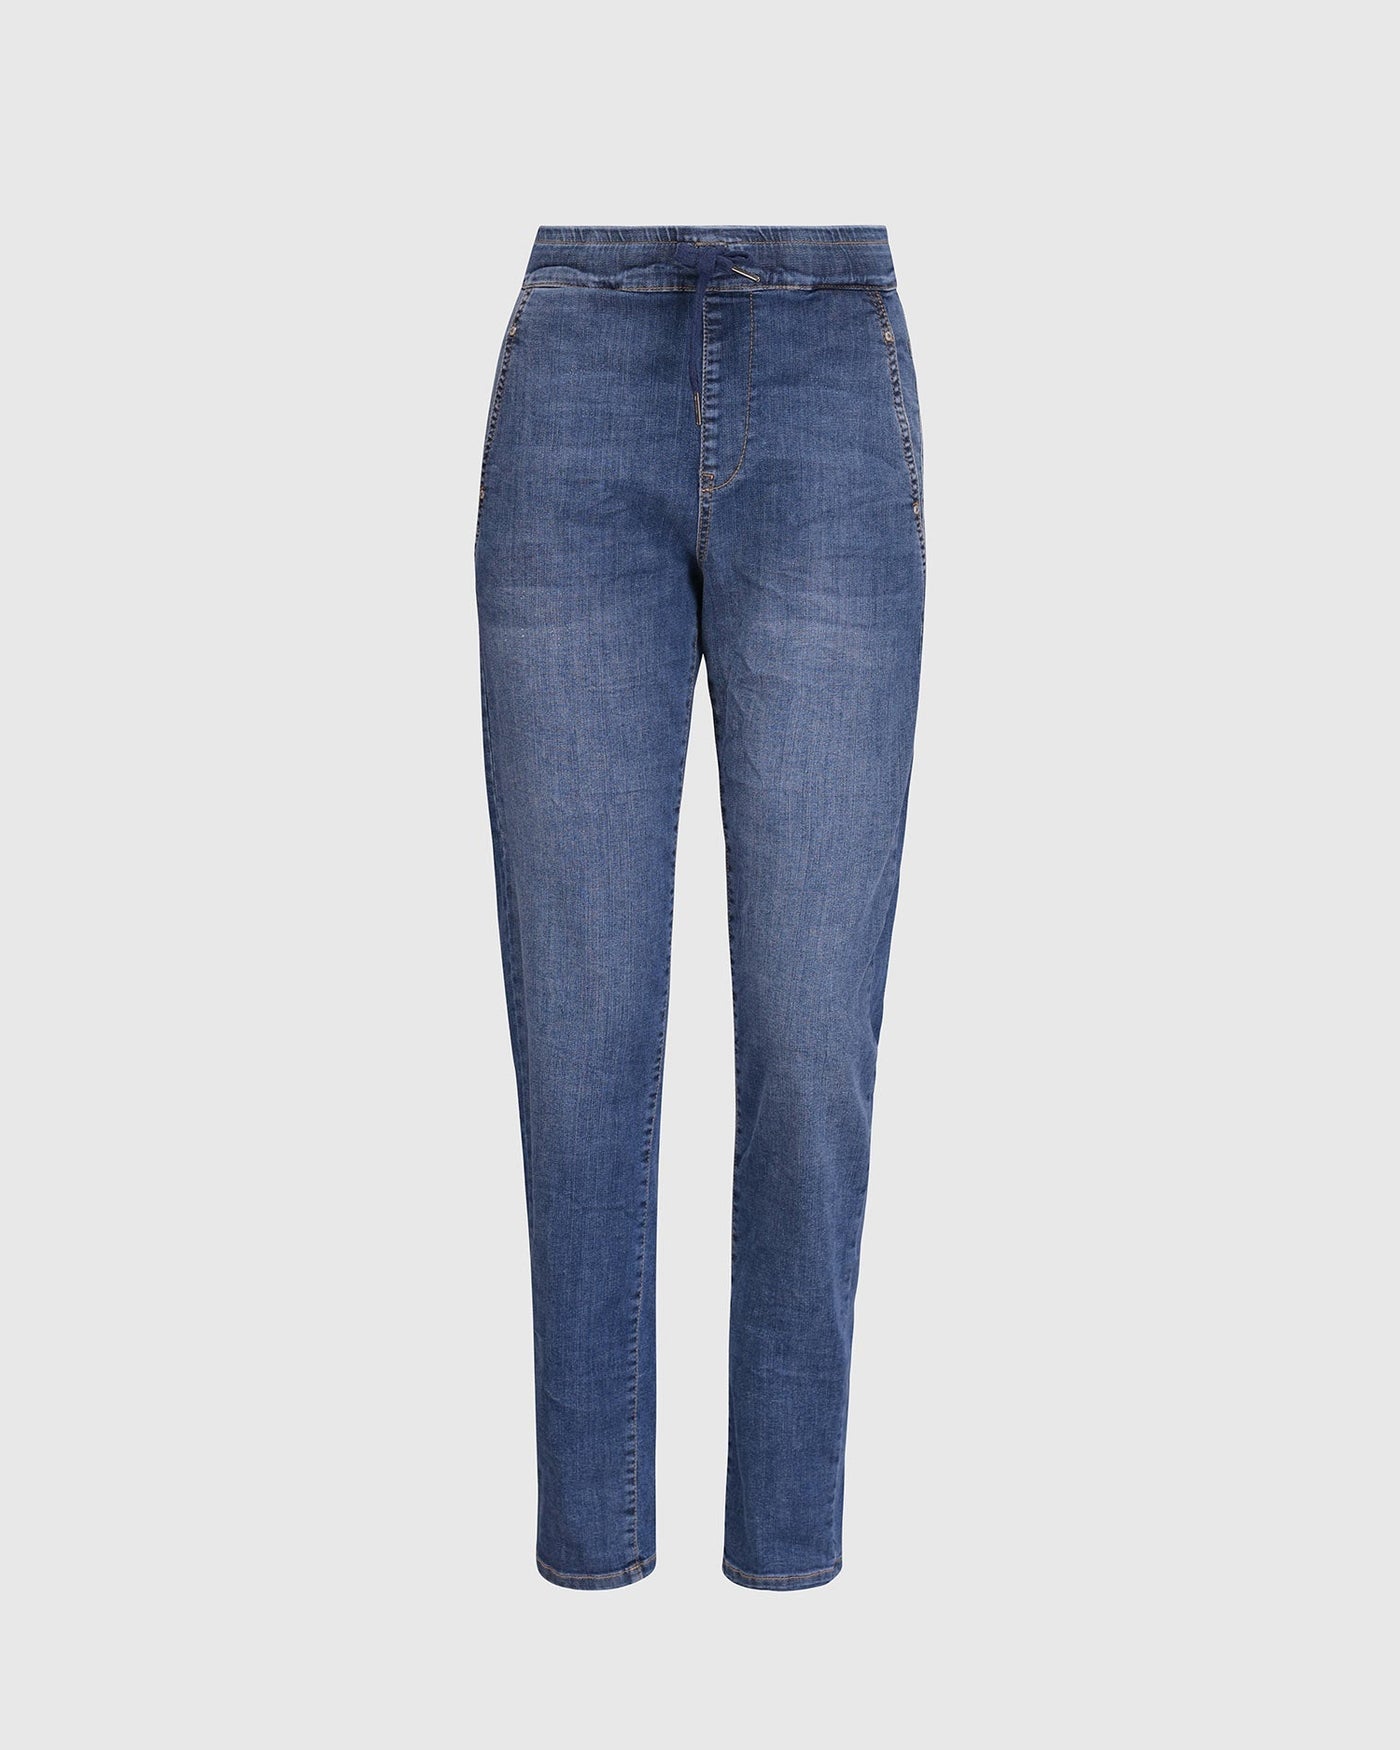 Denim Iconic Stretch Jeans, Blue